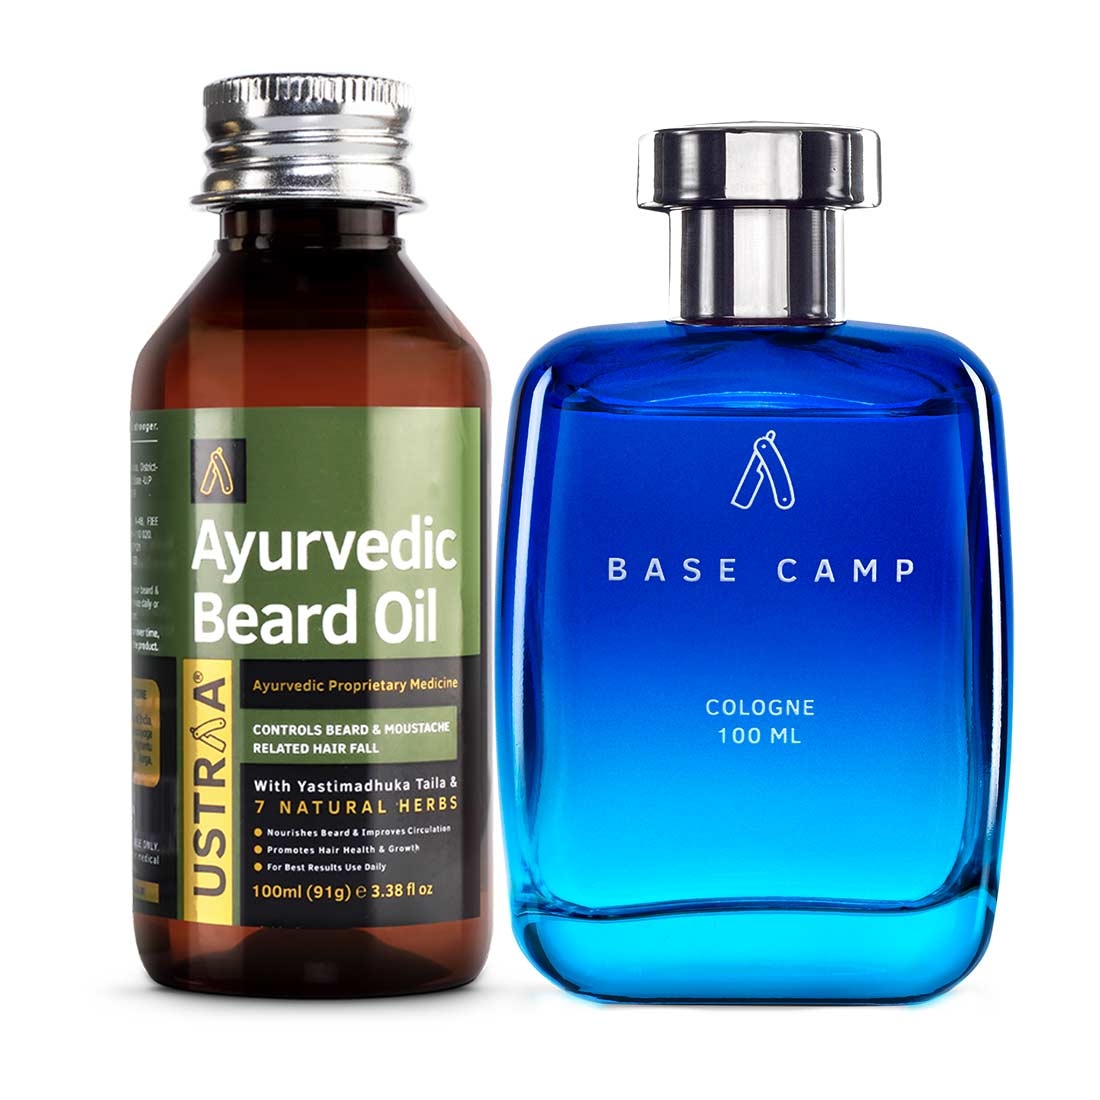 Ustraa | Ustraa Ayurvedic Beard Growth Oil -100ml & Cologne Base Camp - 100ml- Perfume for men